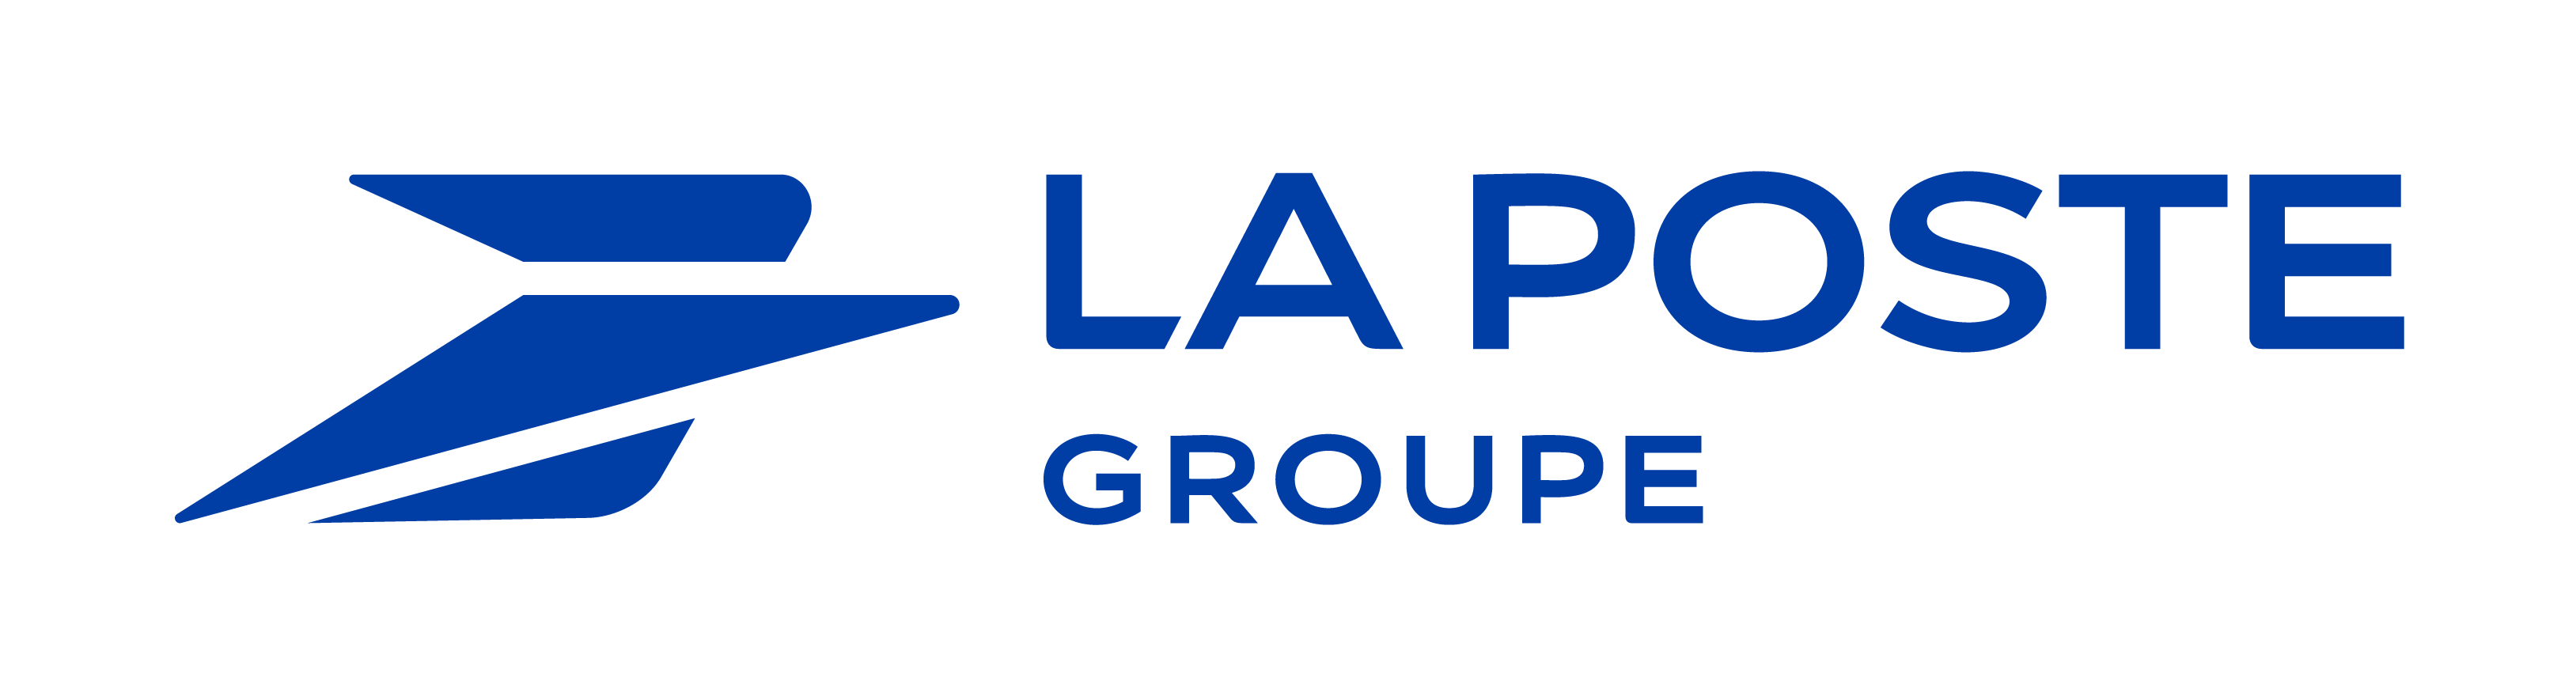 Logo-groupe-la-poste-2021